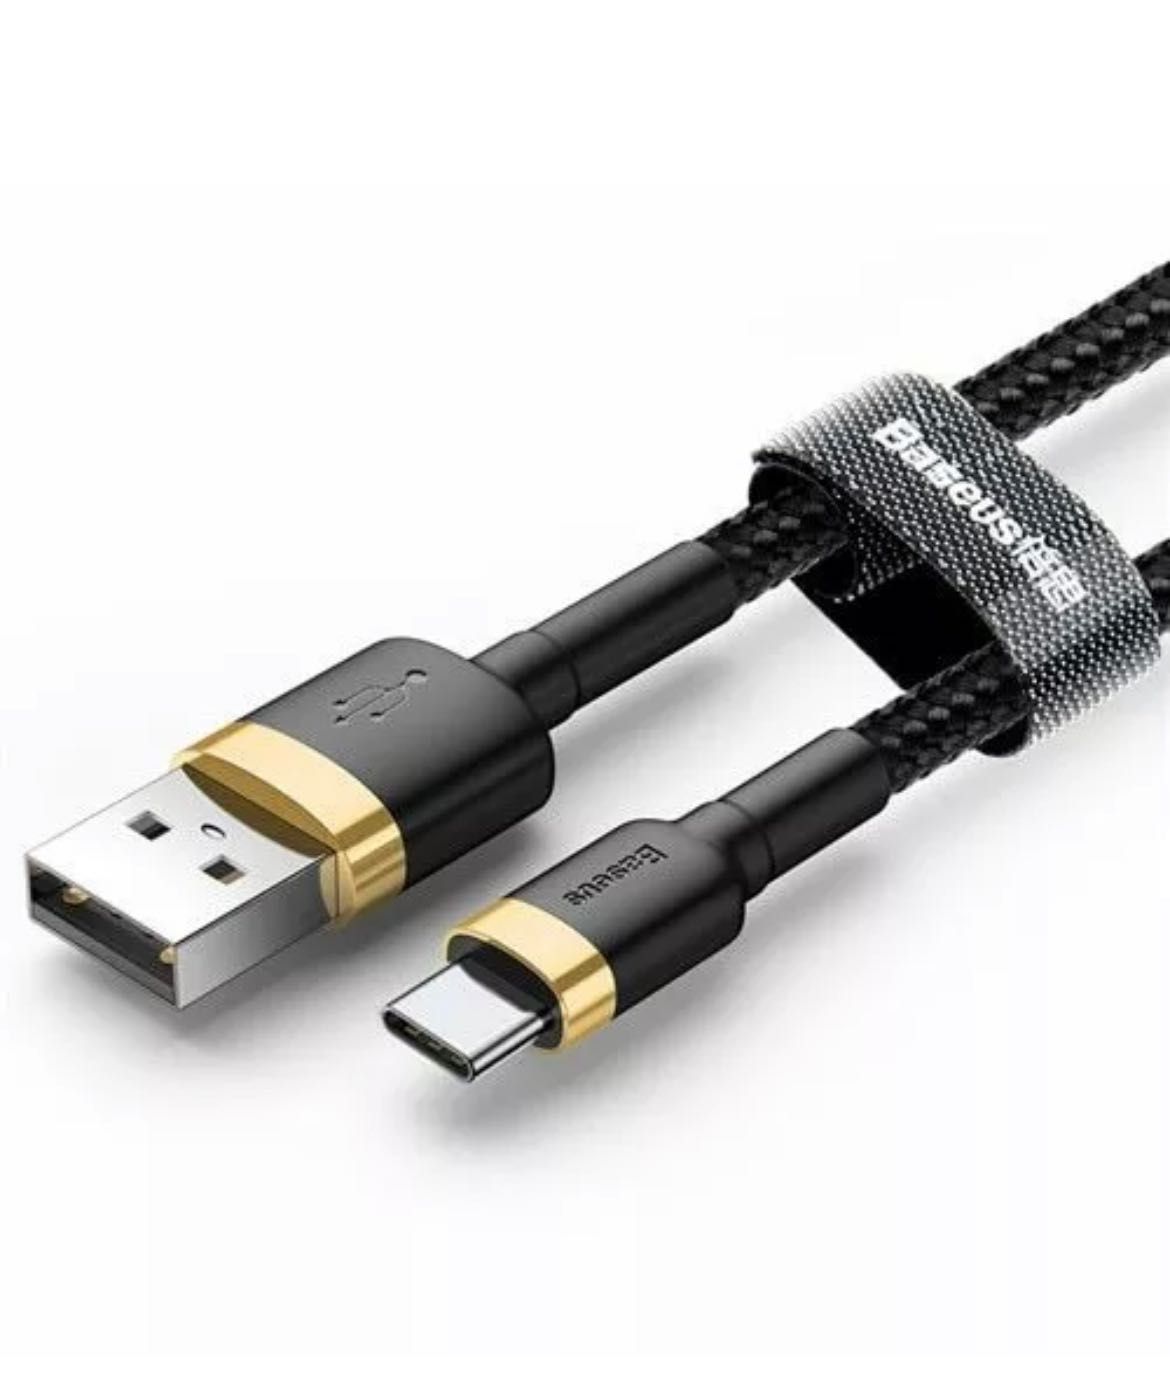 Cablu 1m Baseus USB-C FAST CHARGING Black/Gold/Red NOU